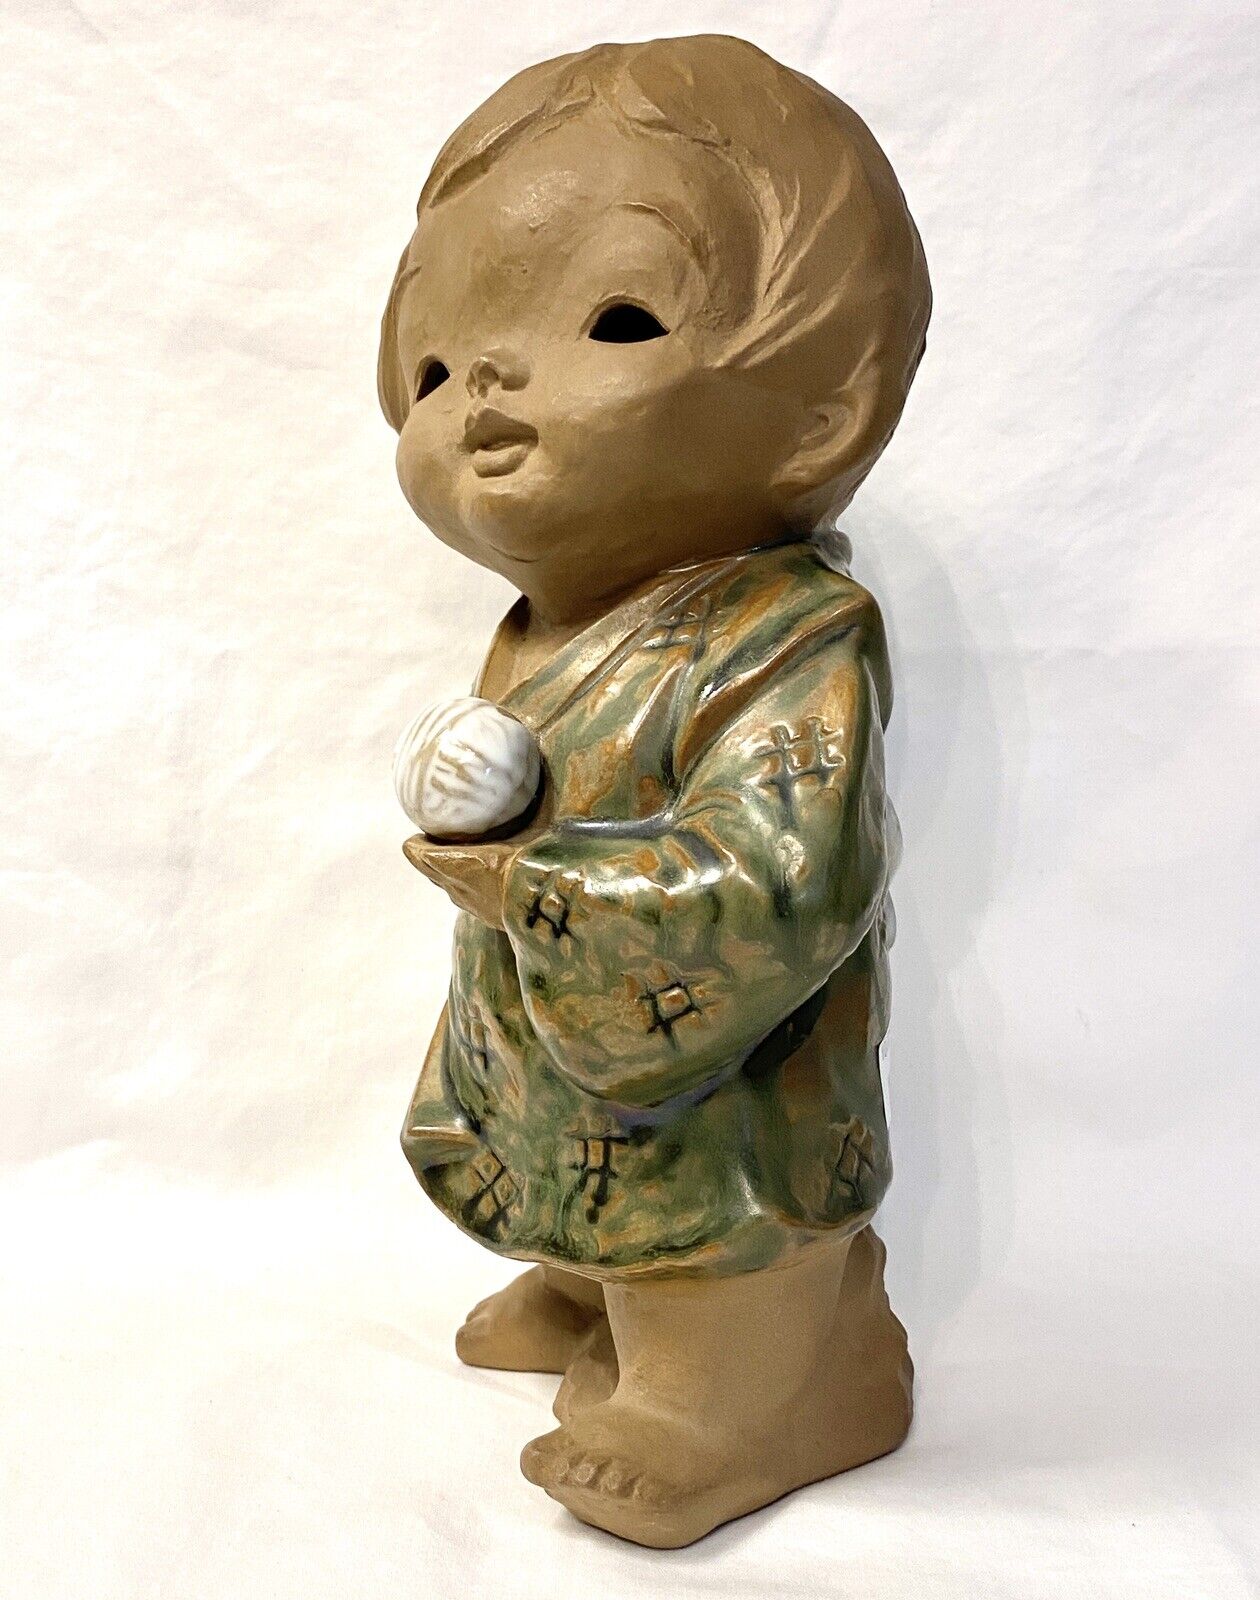 Vintage Japan FOYD Clay Pottery Ceramic Terra Cotta Boy Figurine Hollow Eyes